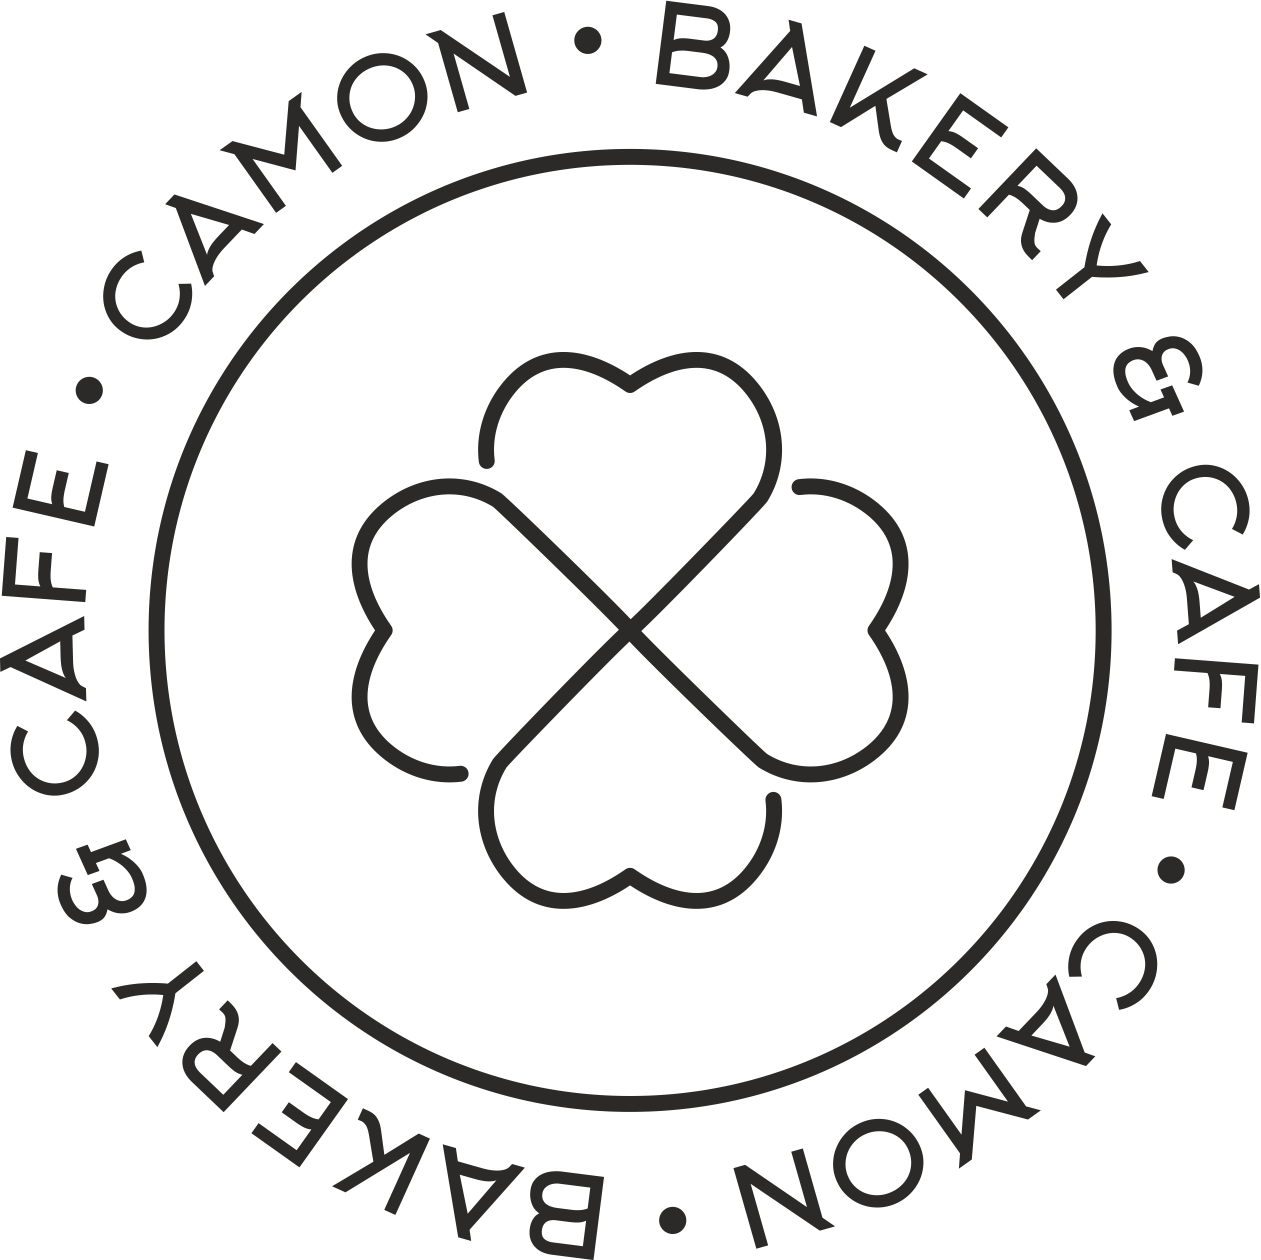 Camon Cafe Оренбург. Камон кафе на 9 января. Jawsspot Оренбург логотип. Оренбург кафе на улице 9 января.